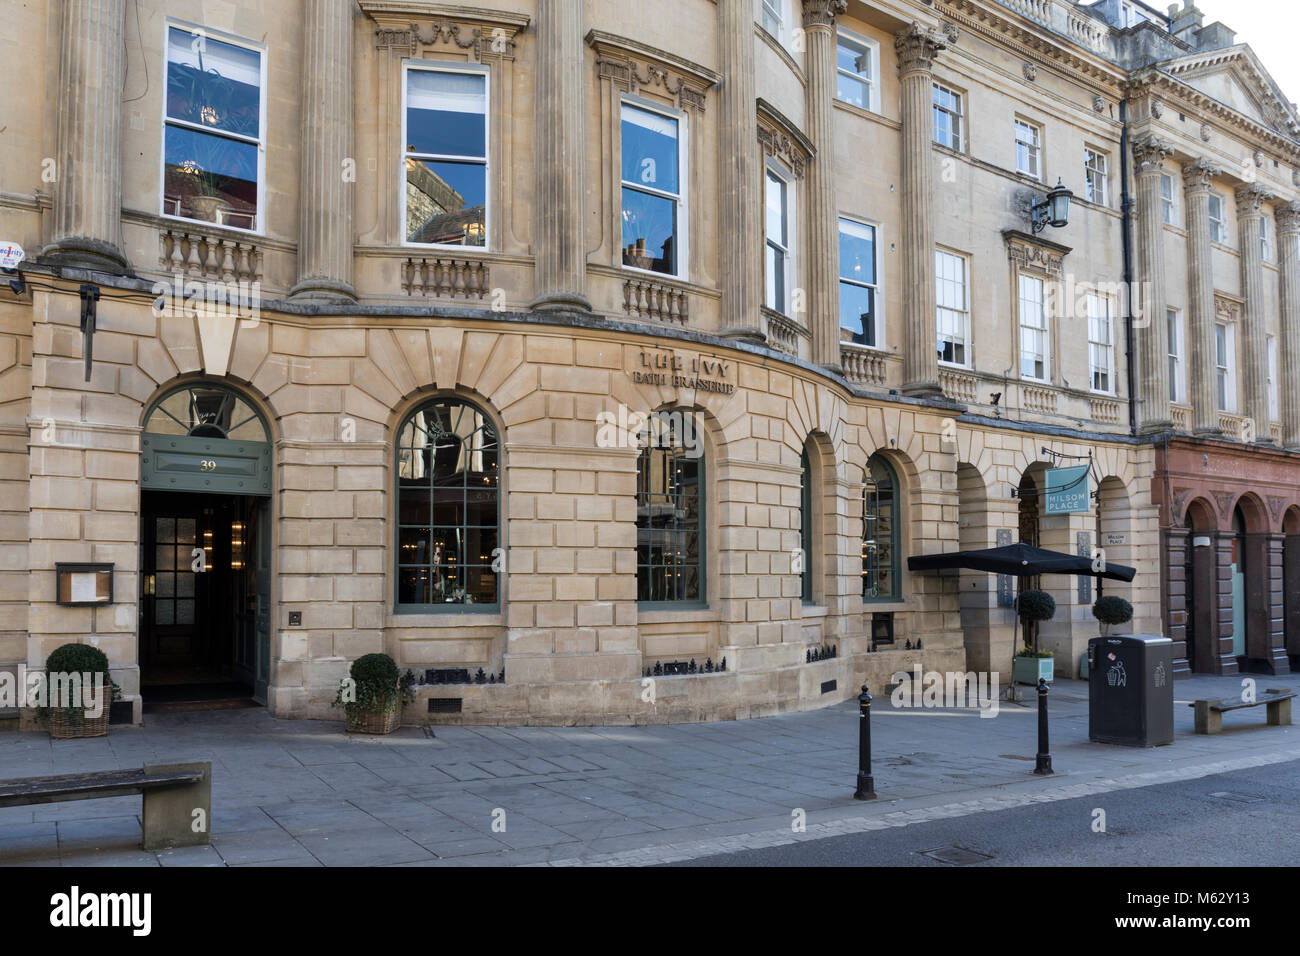 The Ivy Bath Brasserie, Milsom Street, City of Bath, Somerset, England, UK. A UNESCO World Heritage Site Stock Photo